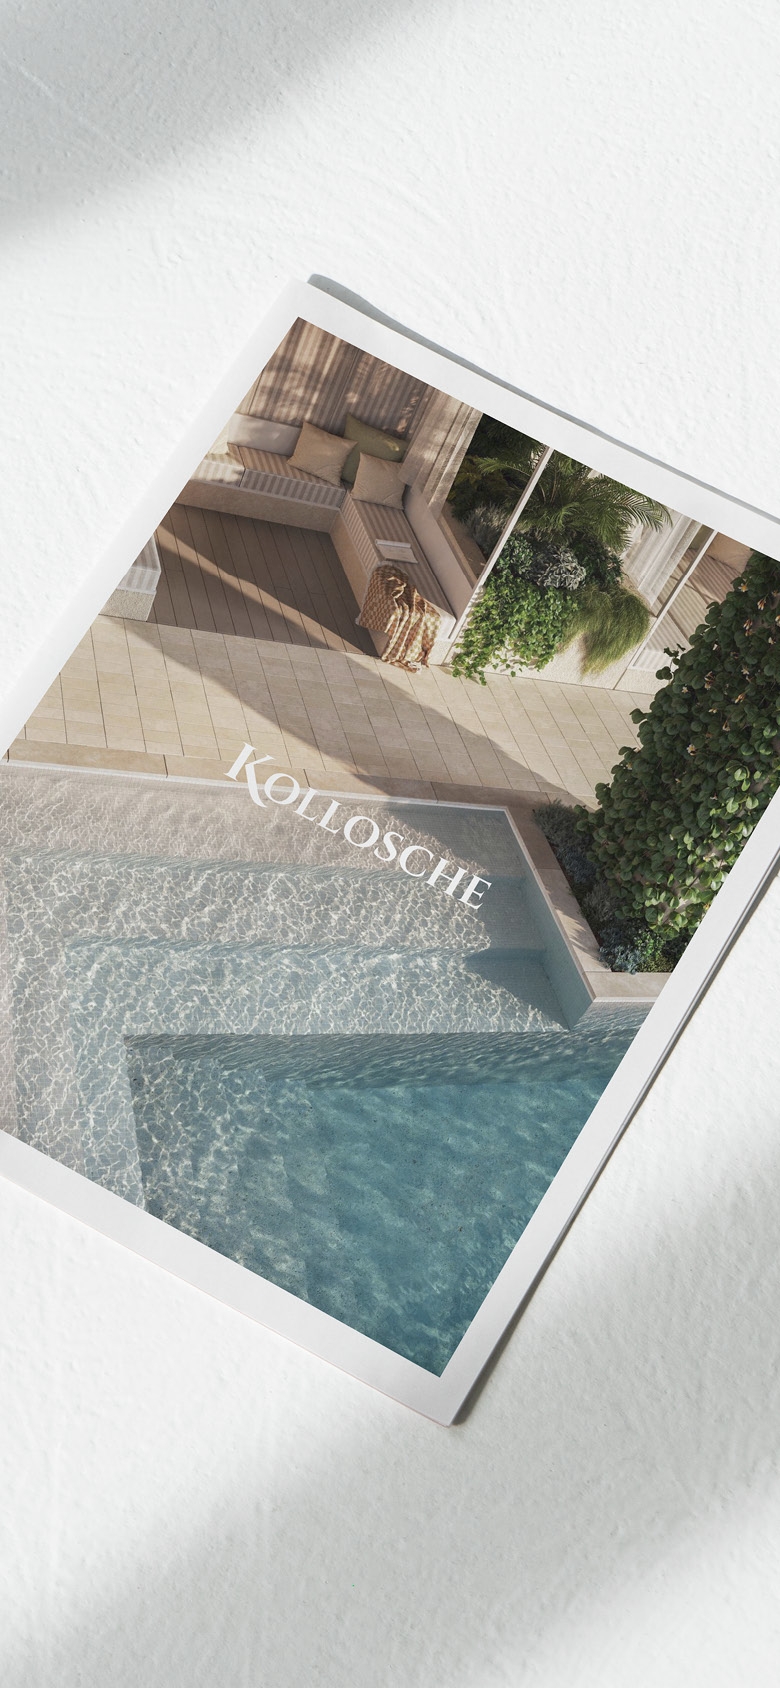 Kollosche Real Estate - Property Brochure Cover Full Image - Print Advertising | Atollon - a design company